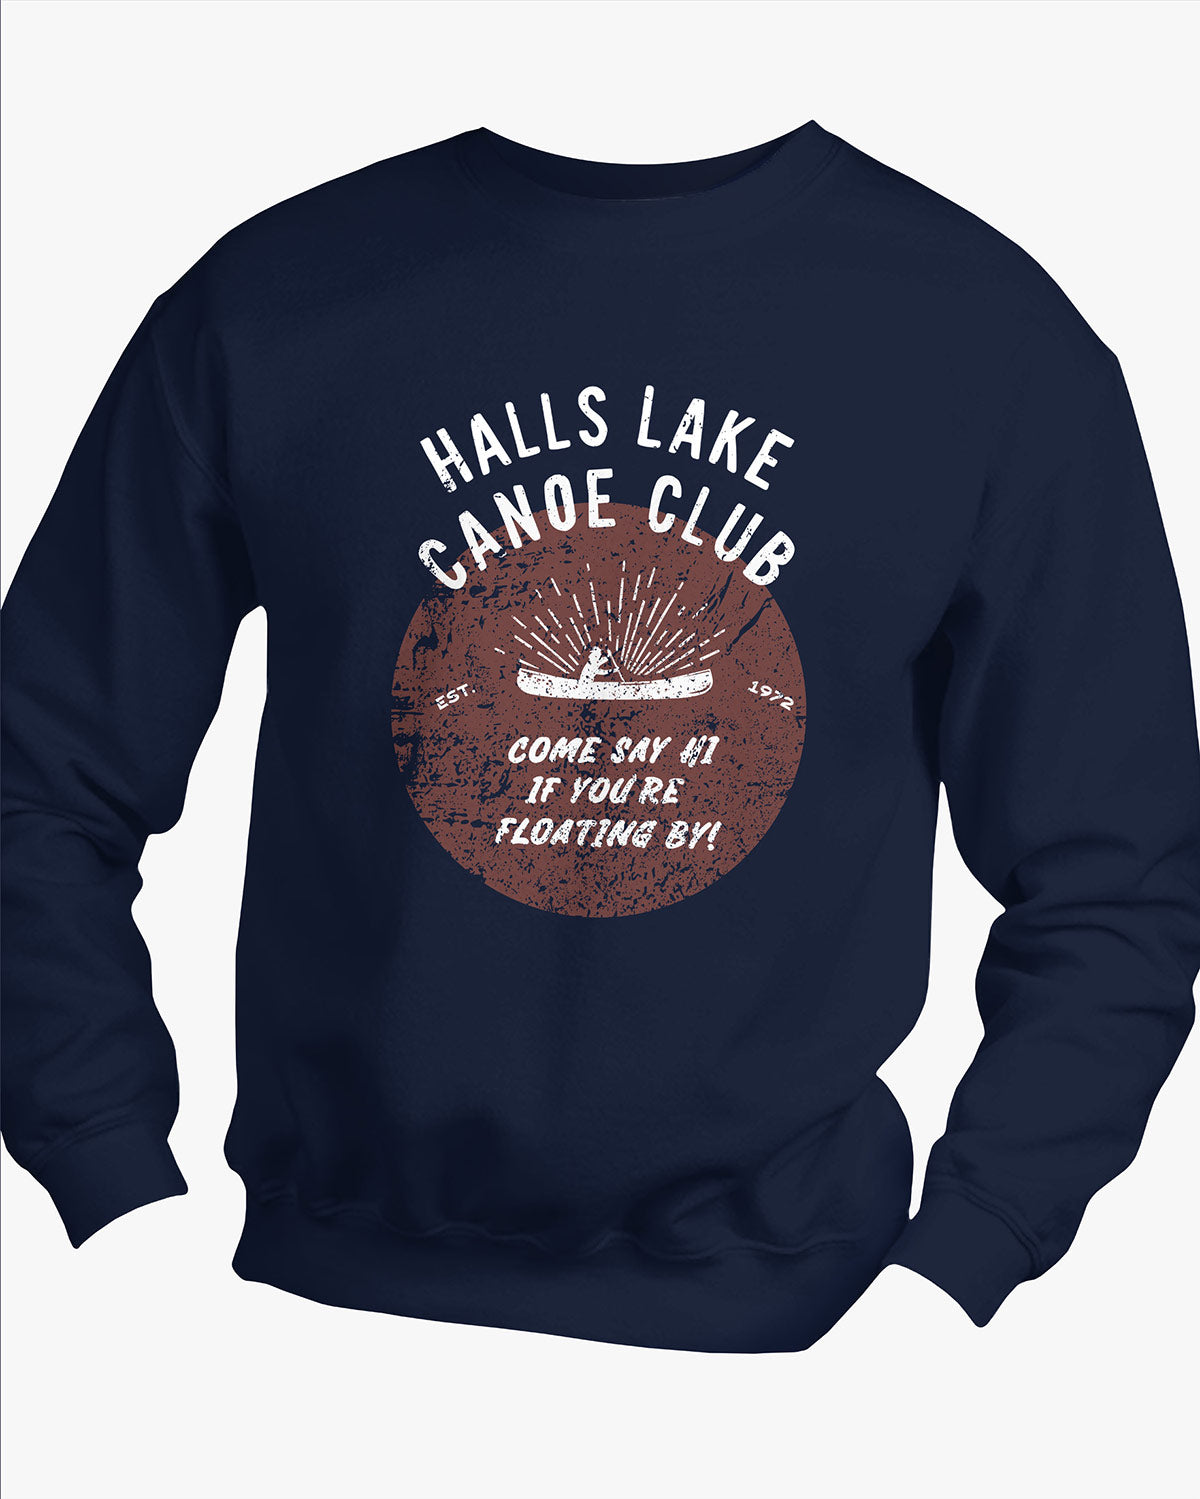 Canoe Club - Halls Lake - Sweater